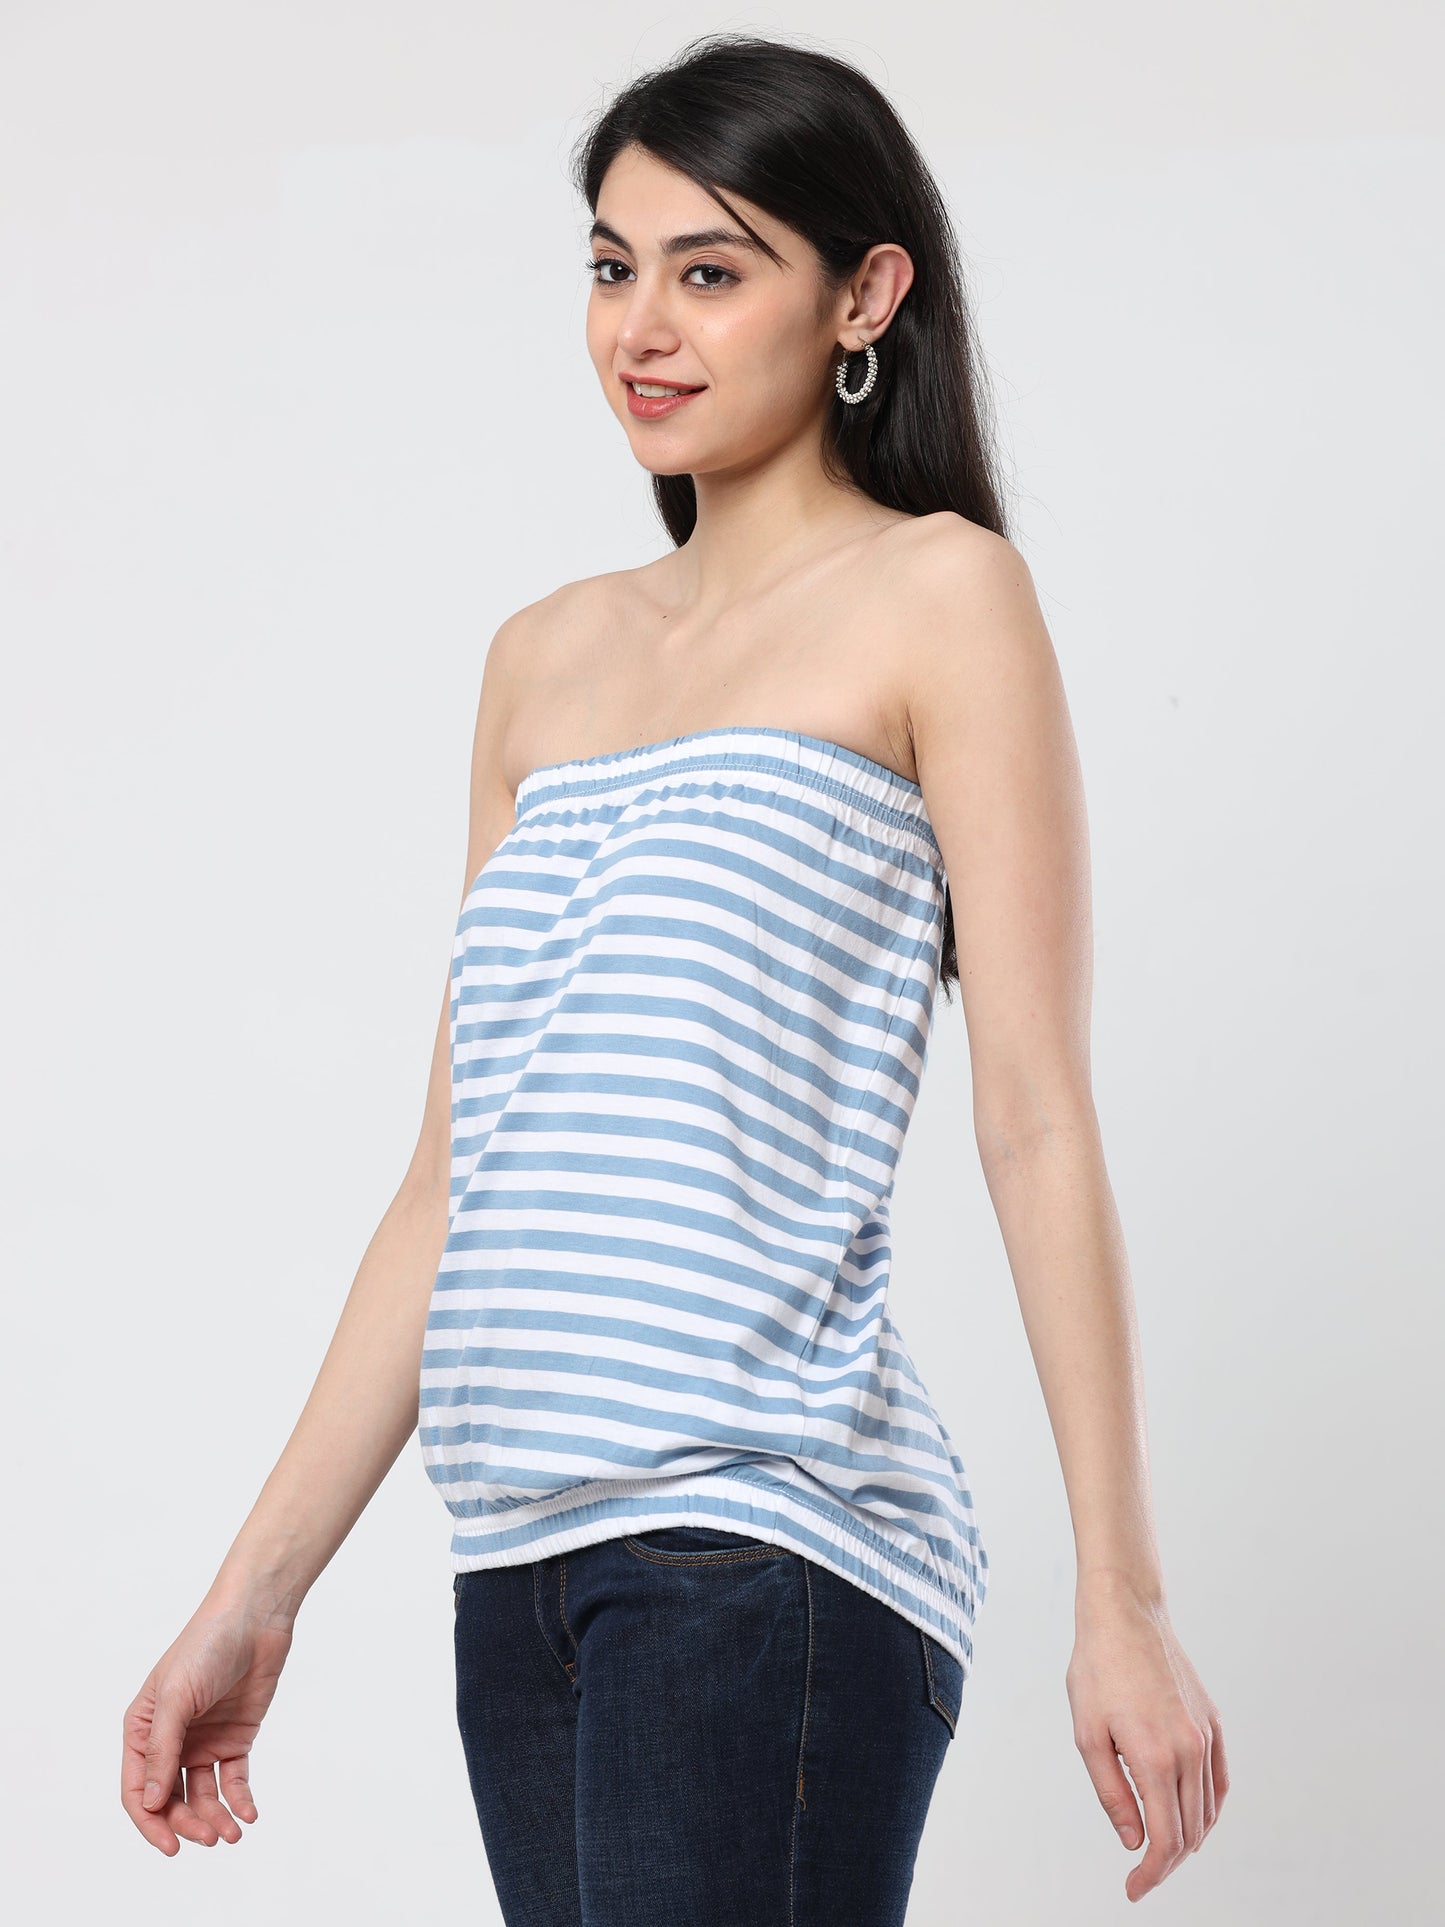 Women's Tube top - Blue/White Stripes